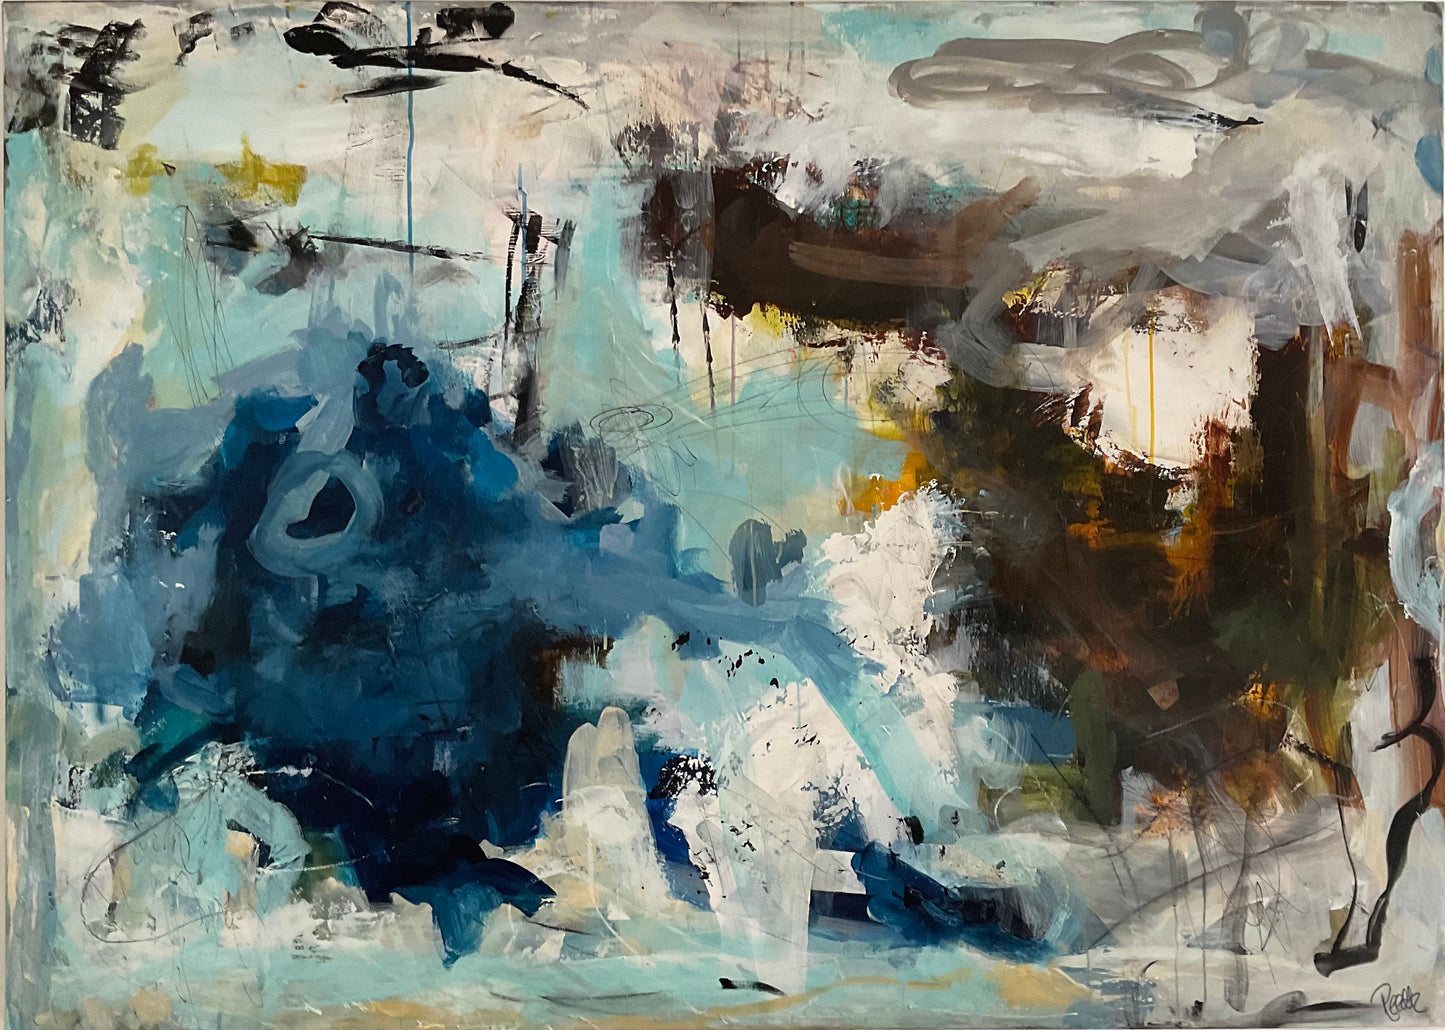 Abstrakt maleri, 140x100 cm, "Grounded" by Lone Reedtz , Abstrakt ekspressivt akrylmaleri på lærred